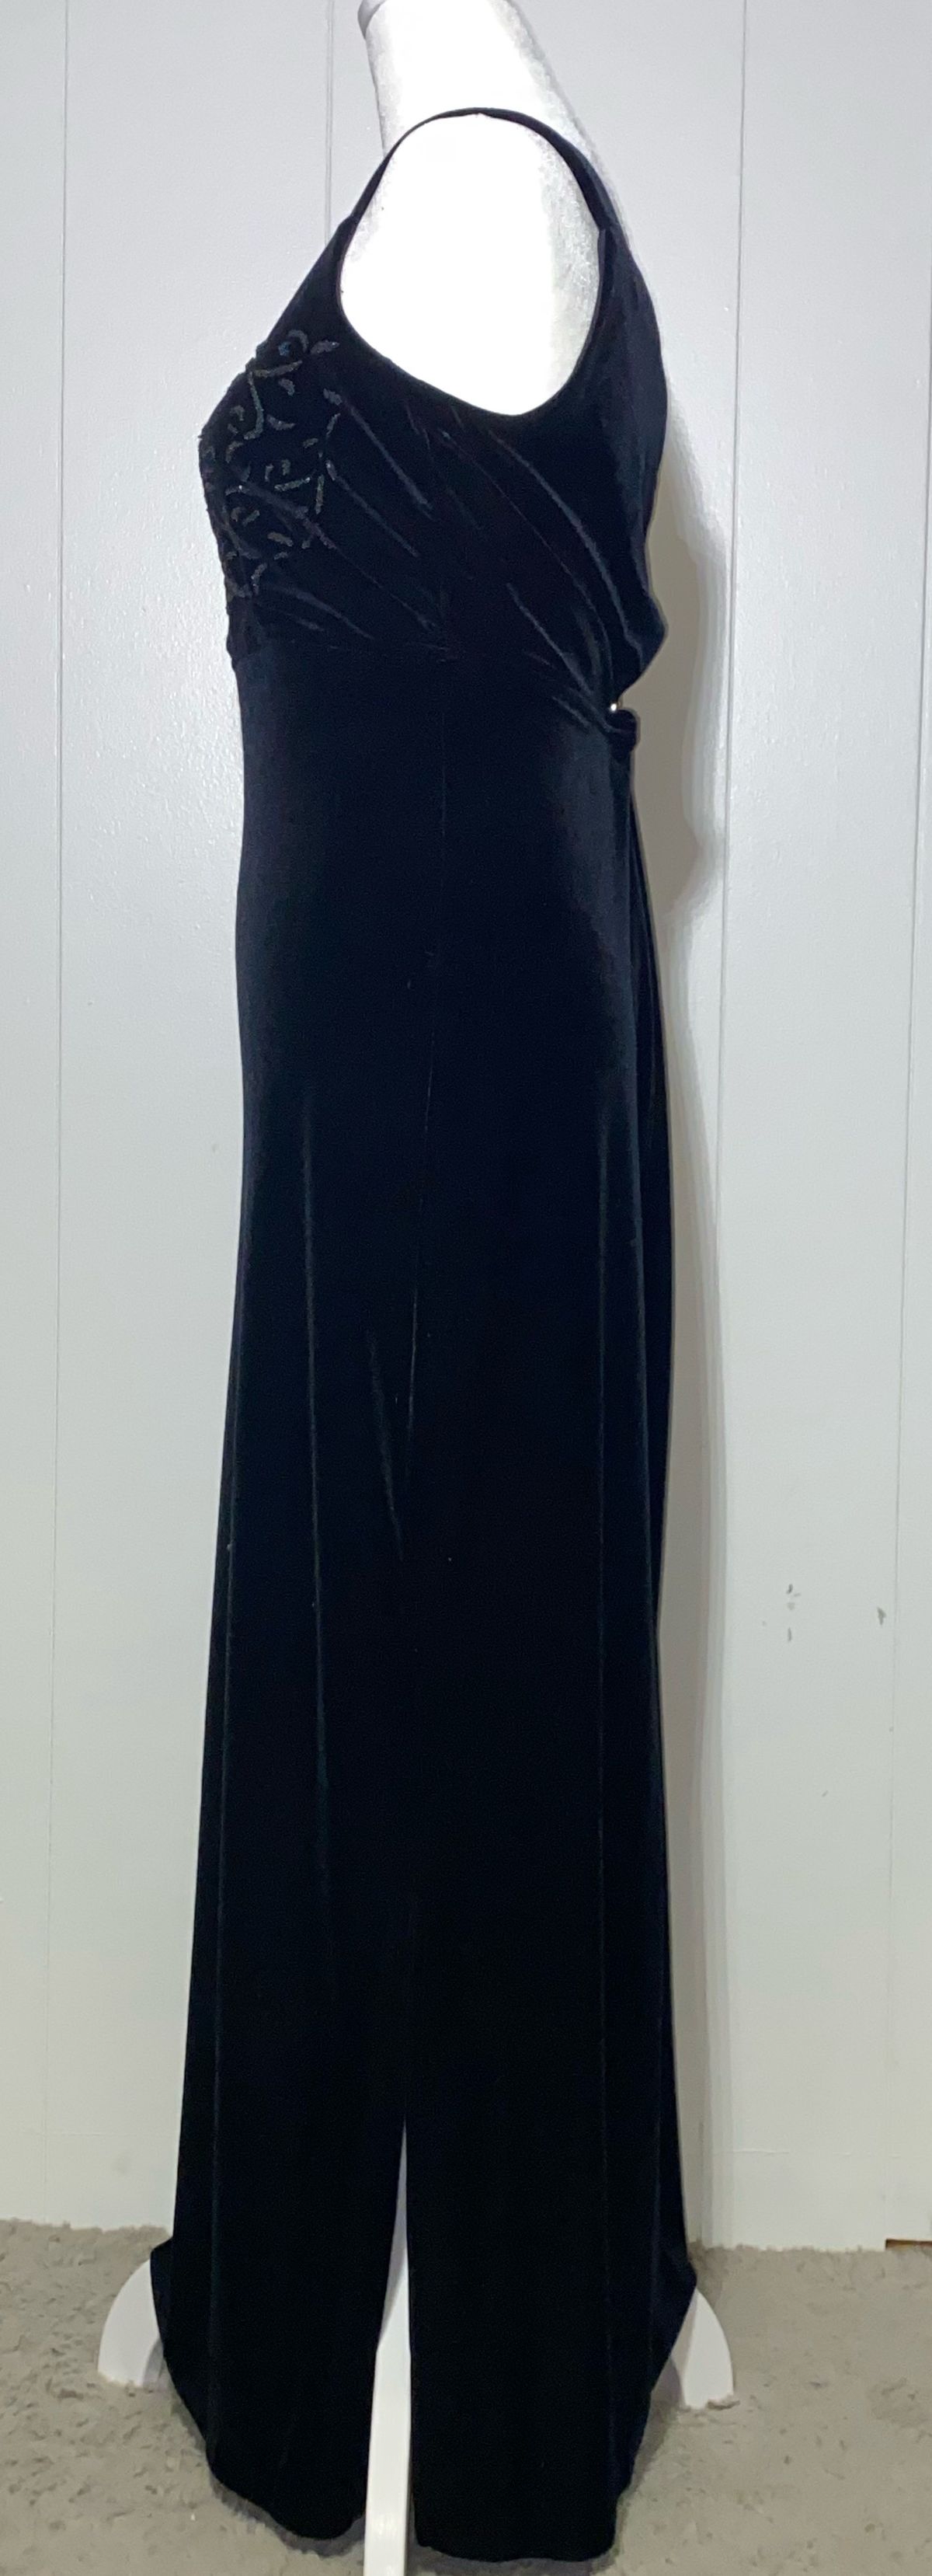 Rabbit Size 6 Velvet Black A-line Dress on Queenly